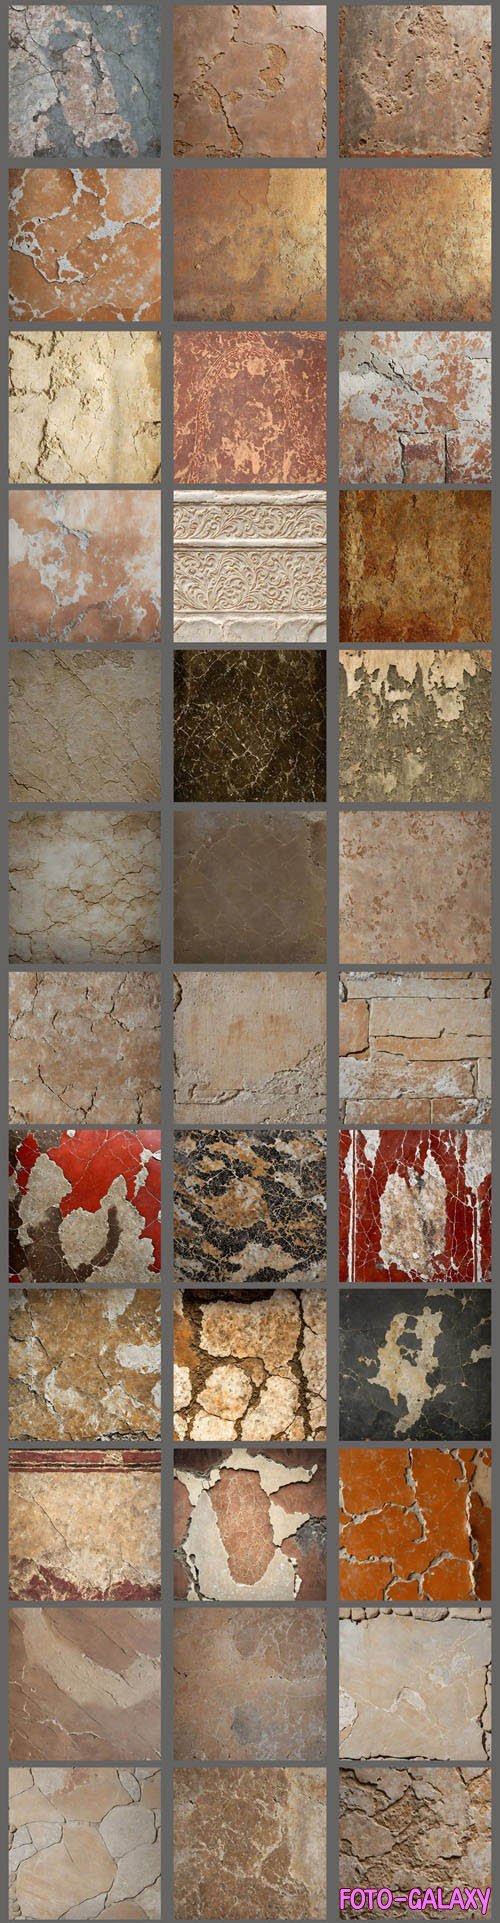 Antique Textures - 150 High Resolution Overlays